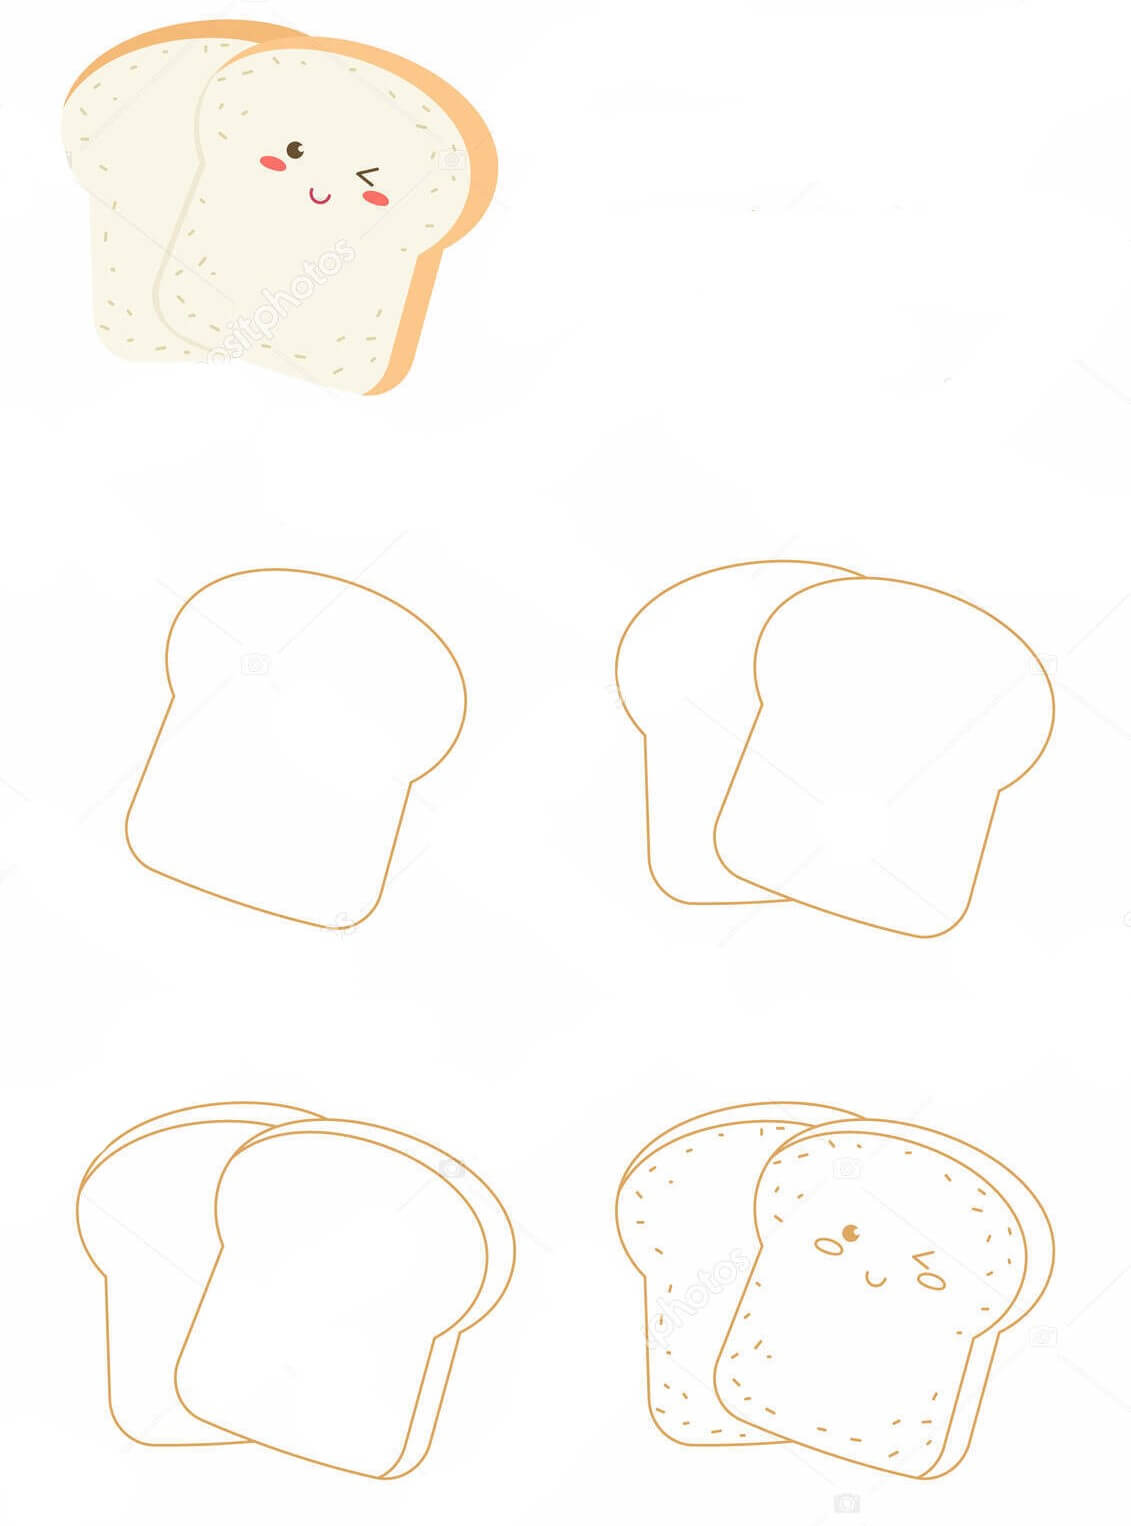 Ekmek fikri (7) çizimi